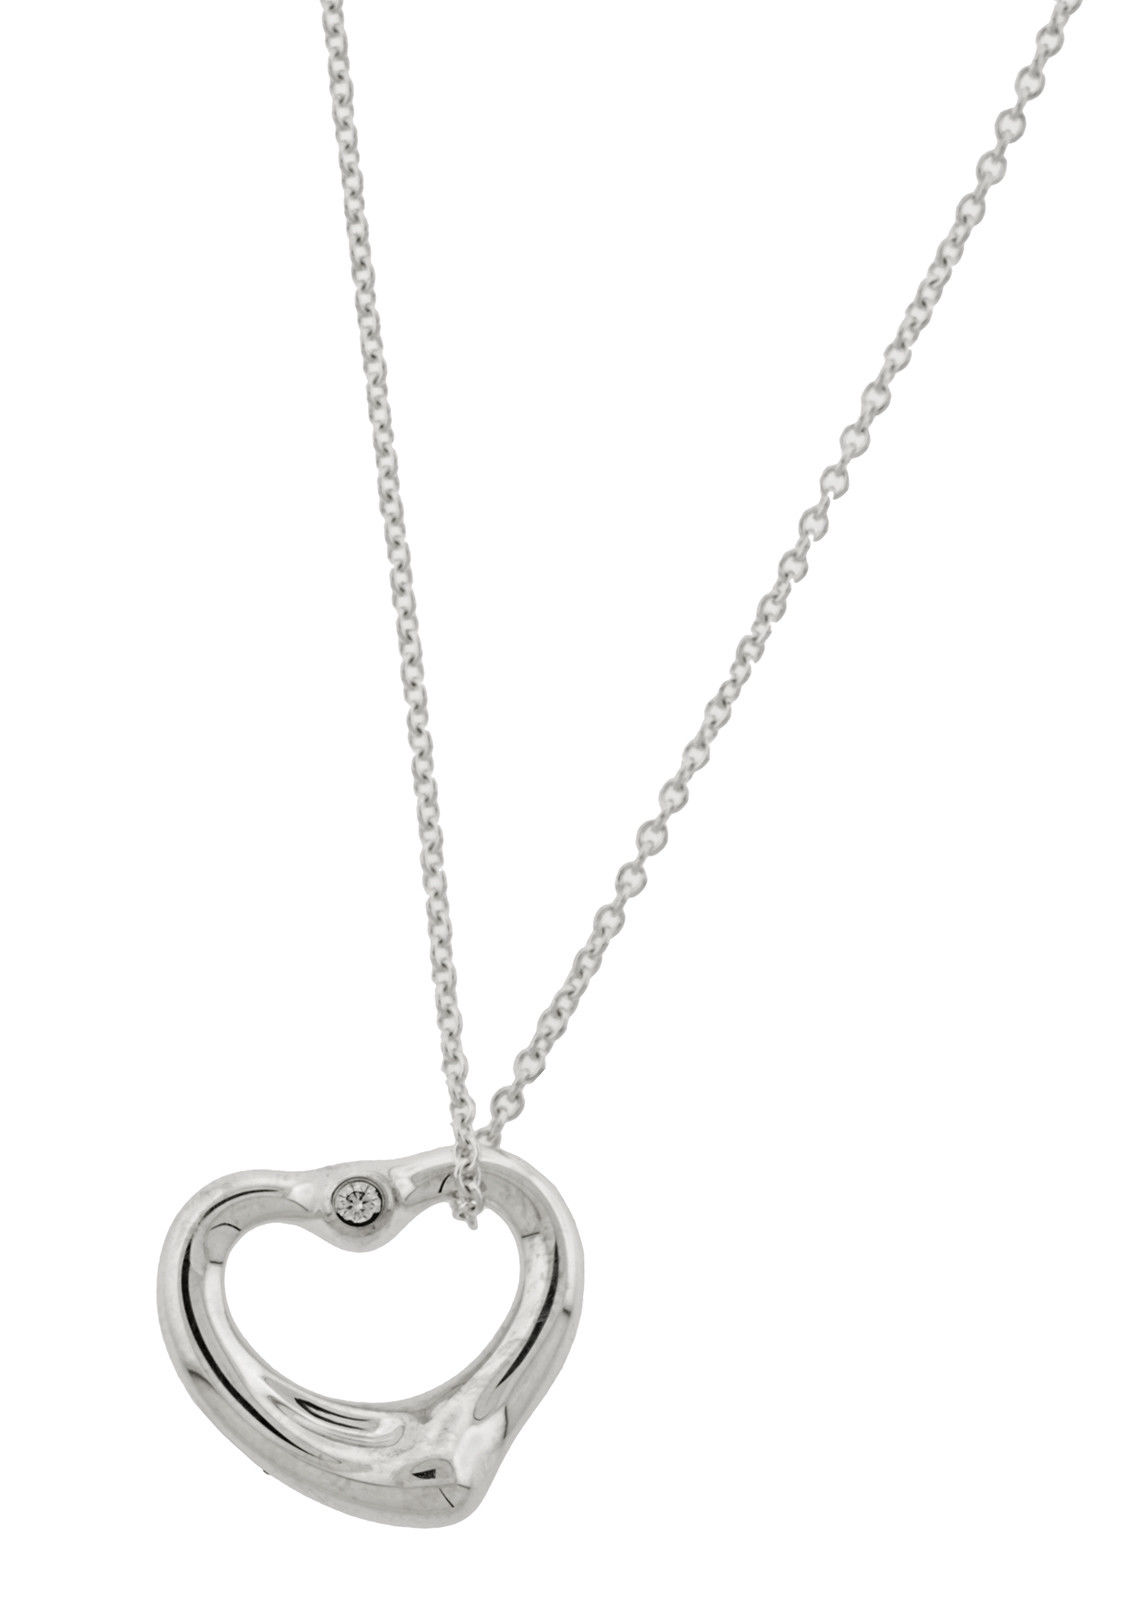 Tiffany & Co Sterling Silver Solid Necklace Chain Peretti Open Heart Pendant